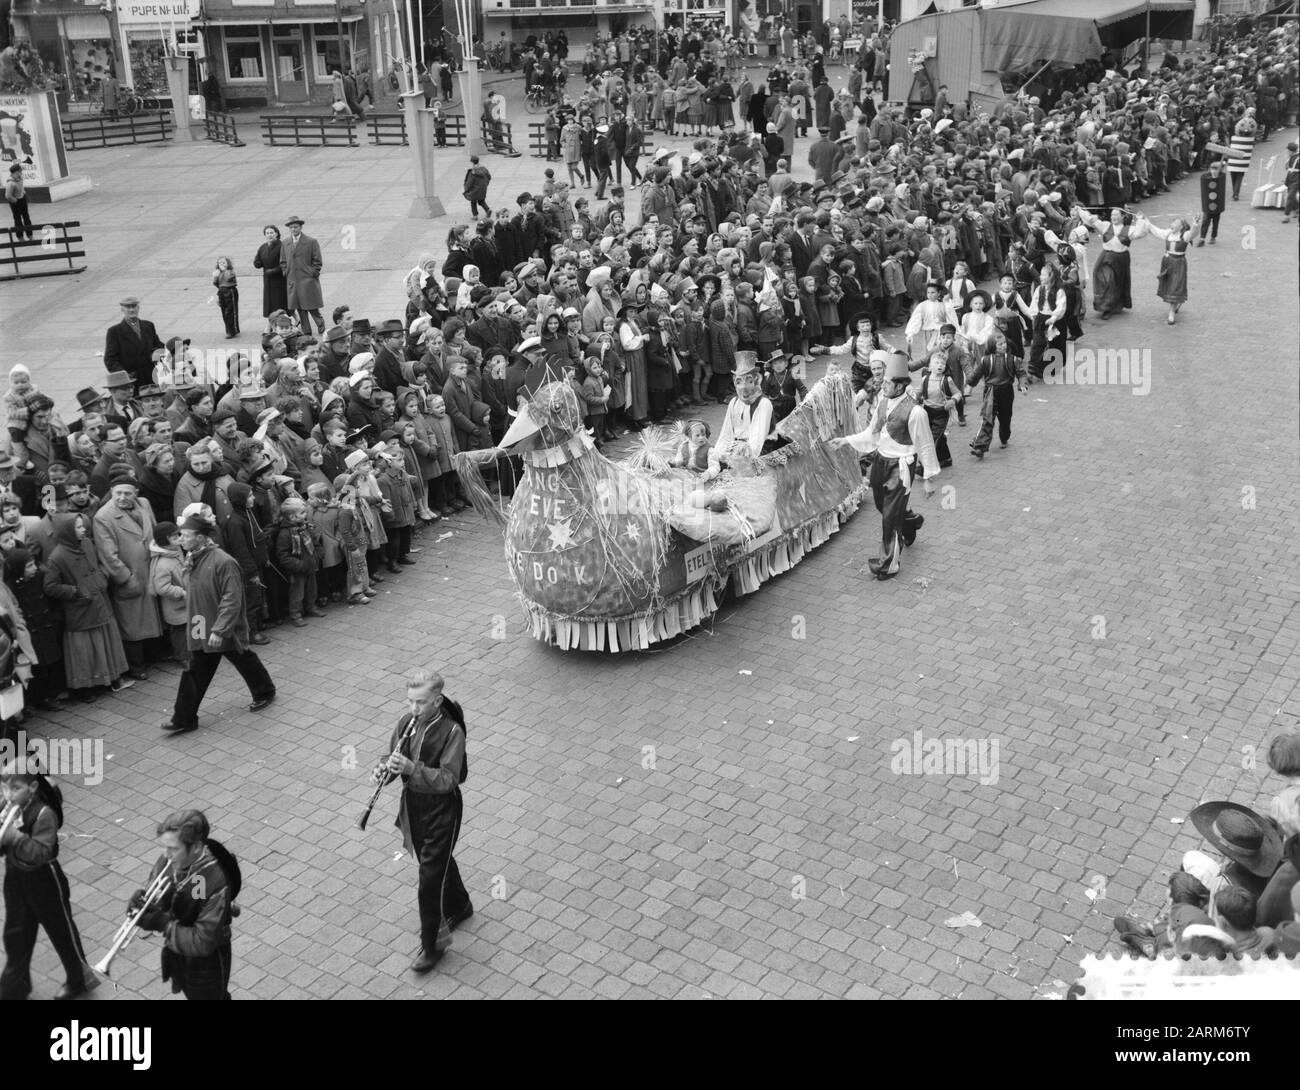 Kinderkarneval in den Bosch Datum: 18. Februar 1958 Ort: Den Bosch Schlagwörter: Karneval Stockfoto